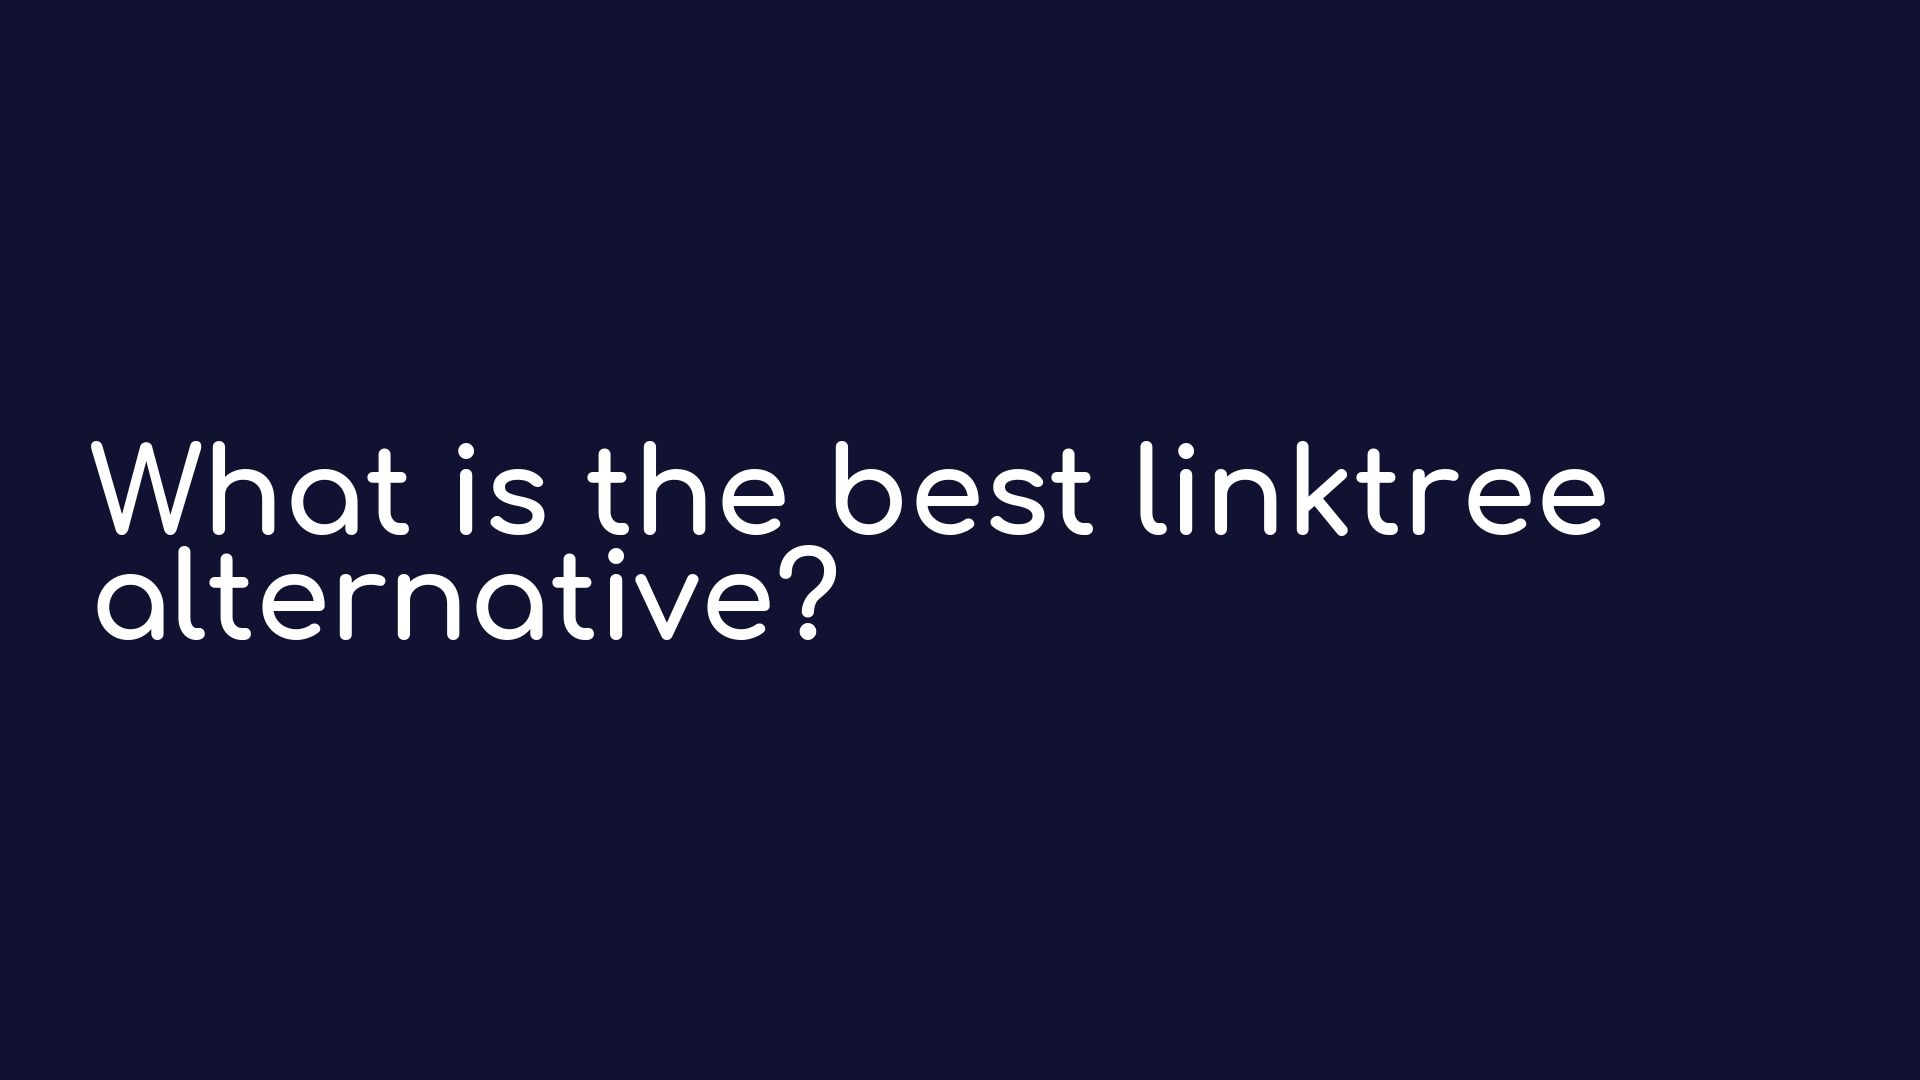 What is the best linktree alternative?